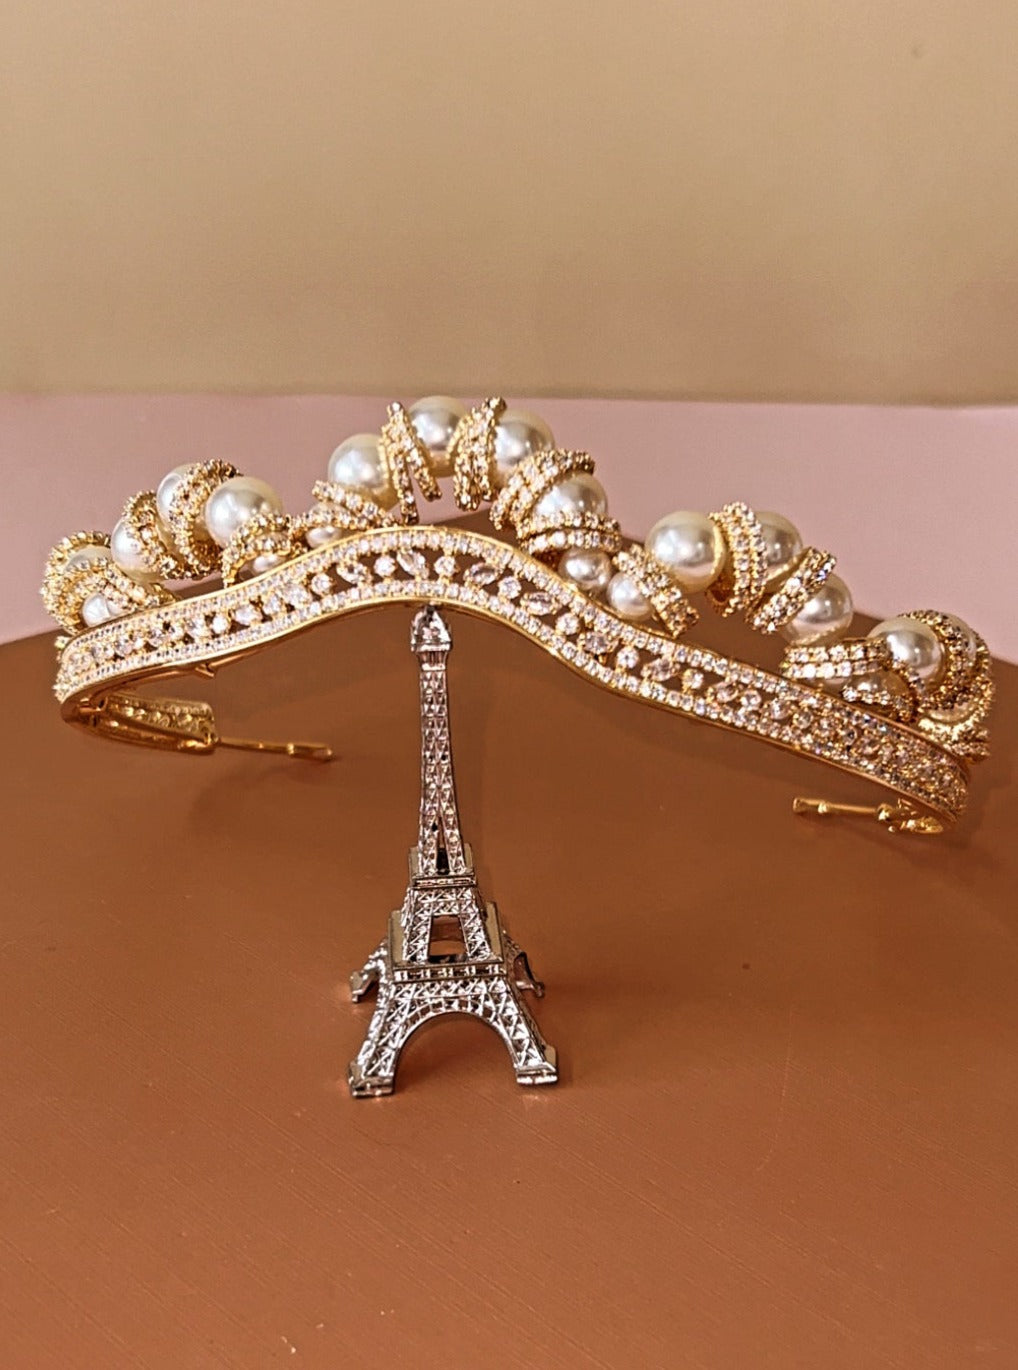 ADELAIDE Swarovski and Pearls Stunning Bridal Tiara (Final Sale)